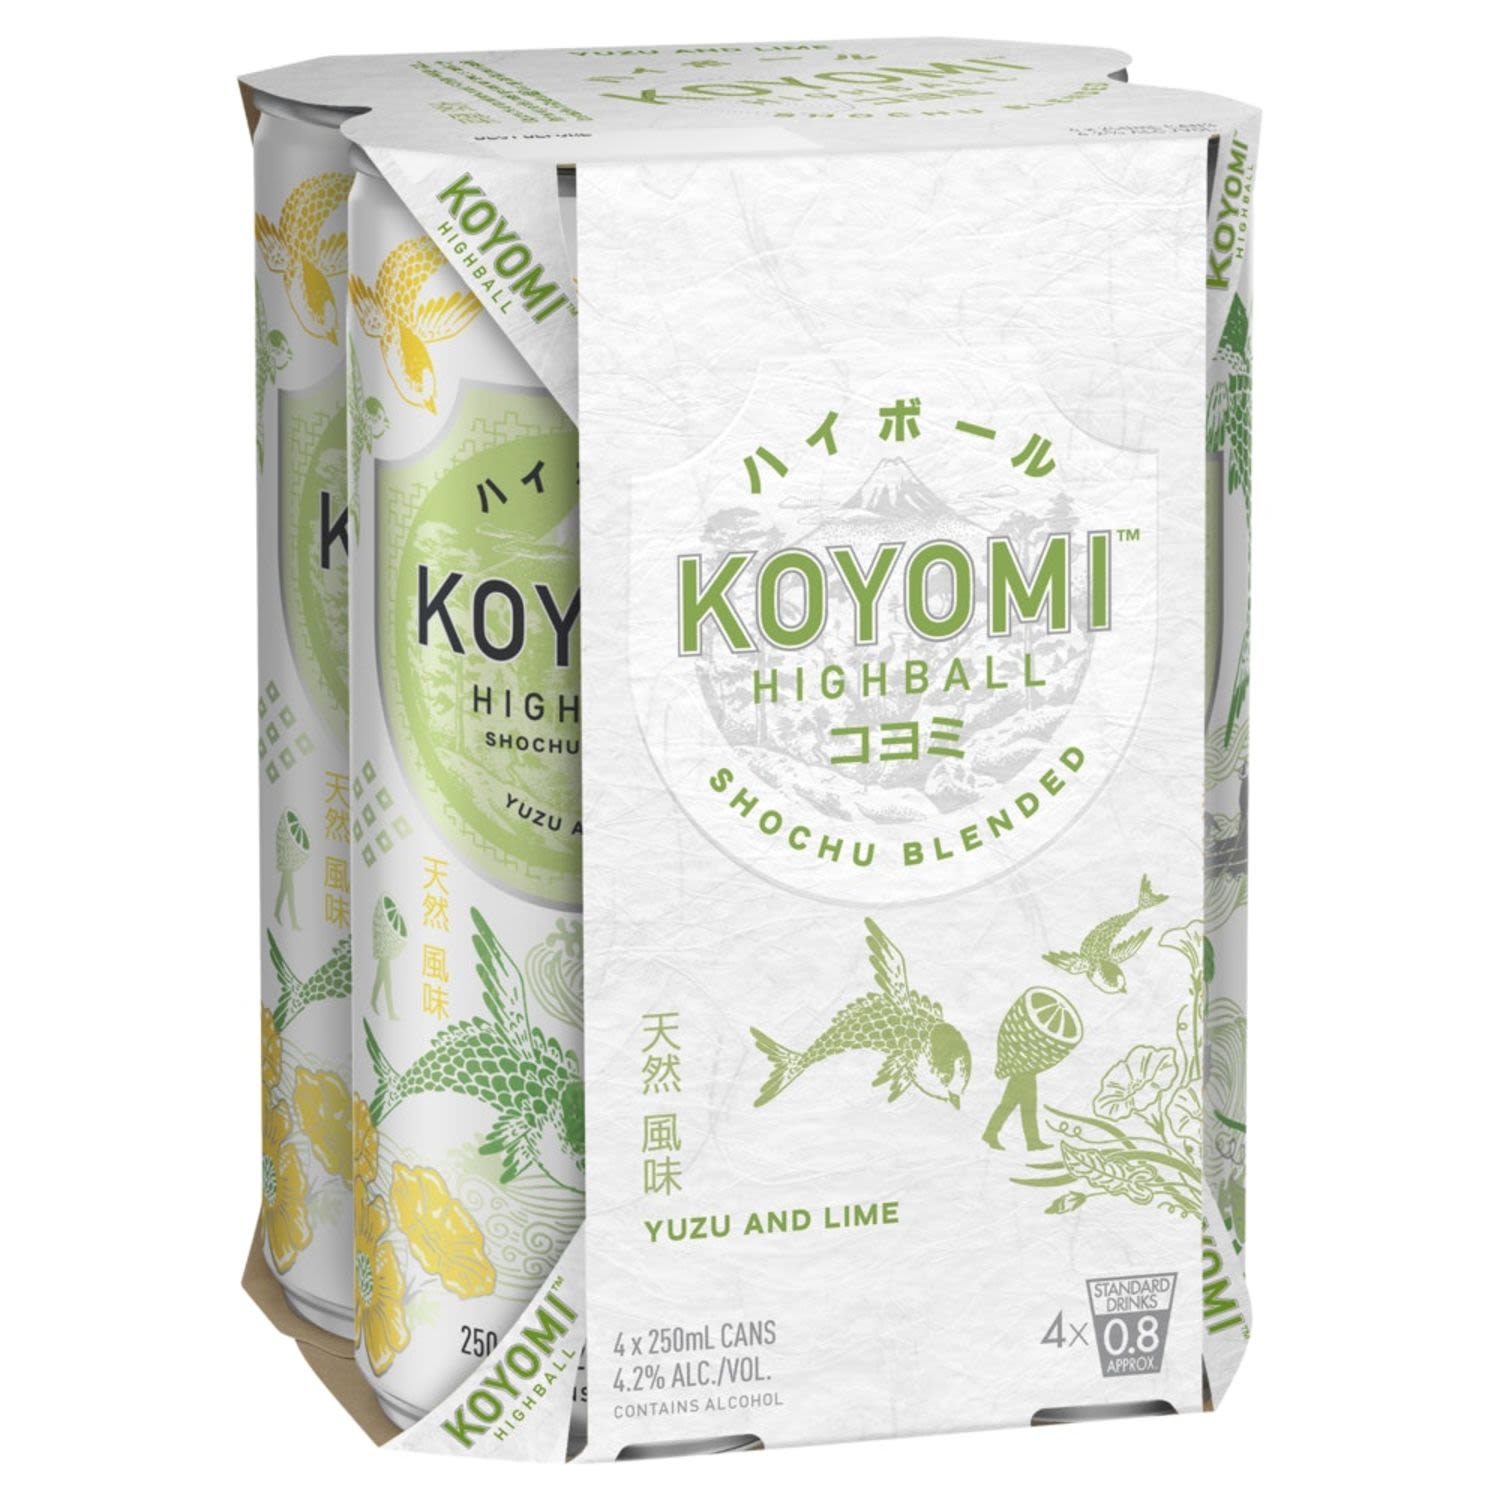 Koyomi Shochu Blended Yuzu and Lime Highball Can 250mL 4 Pack